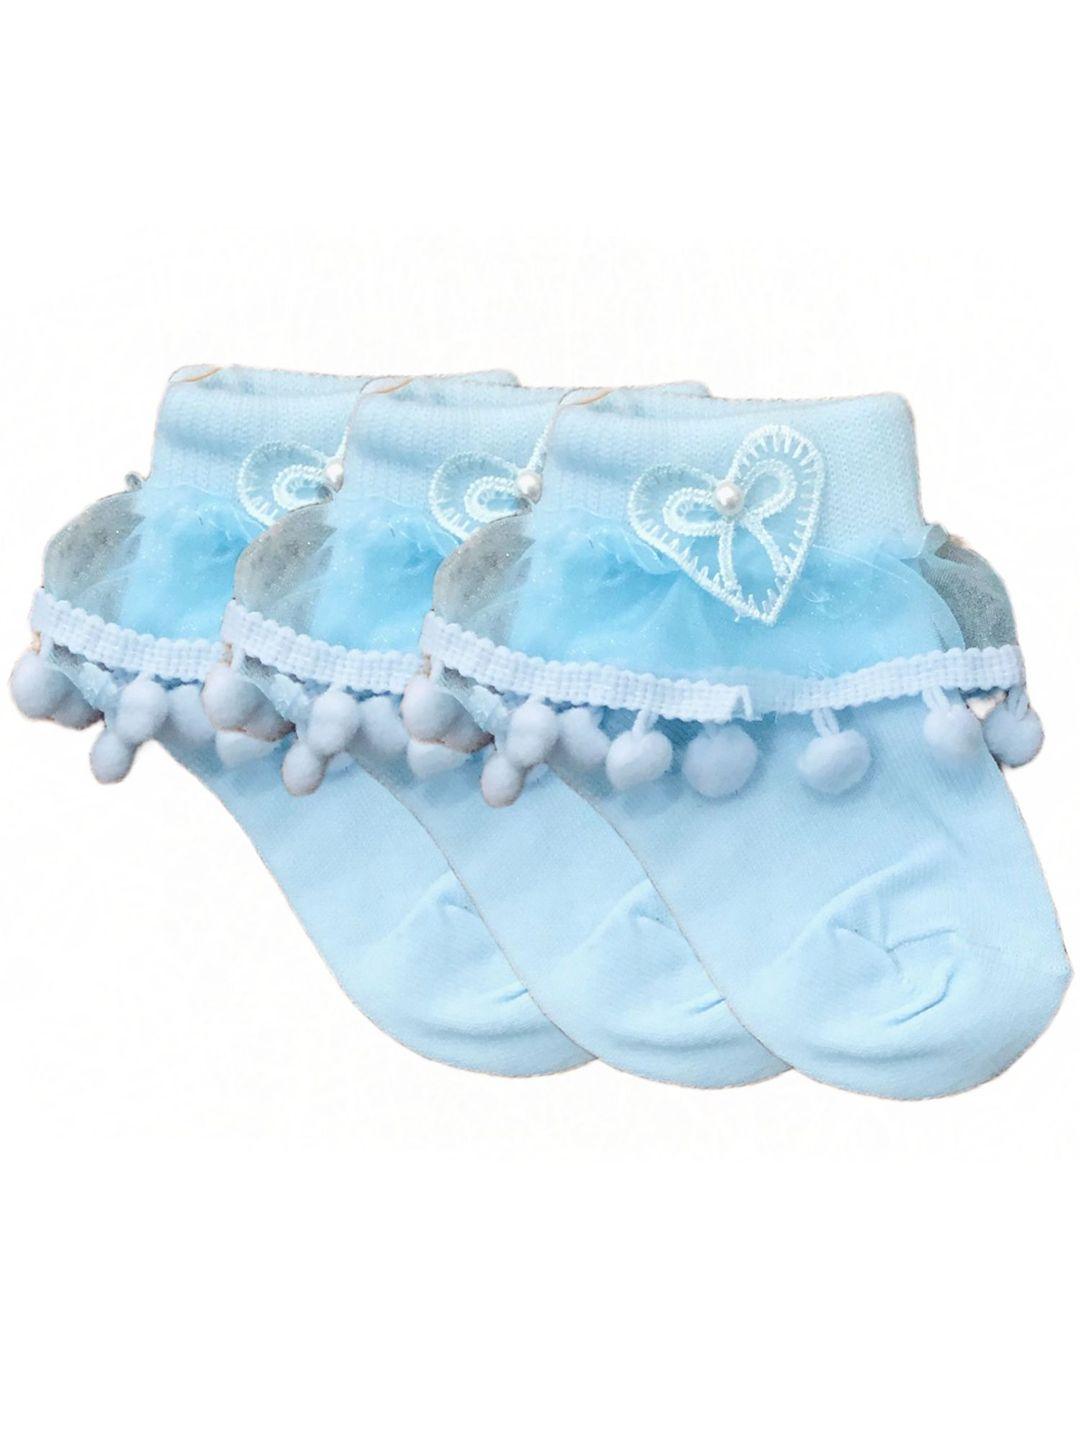 n2s next2skin  infant girls set of 3 blue cotton socks with frills